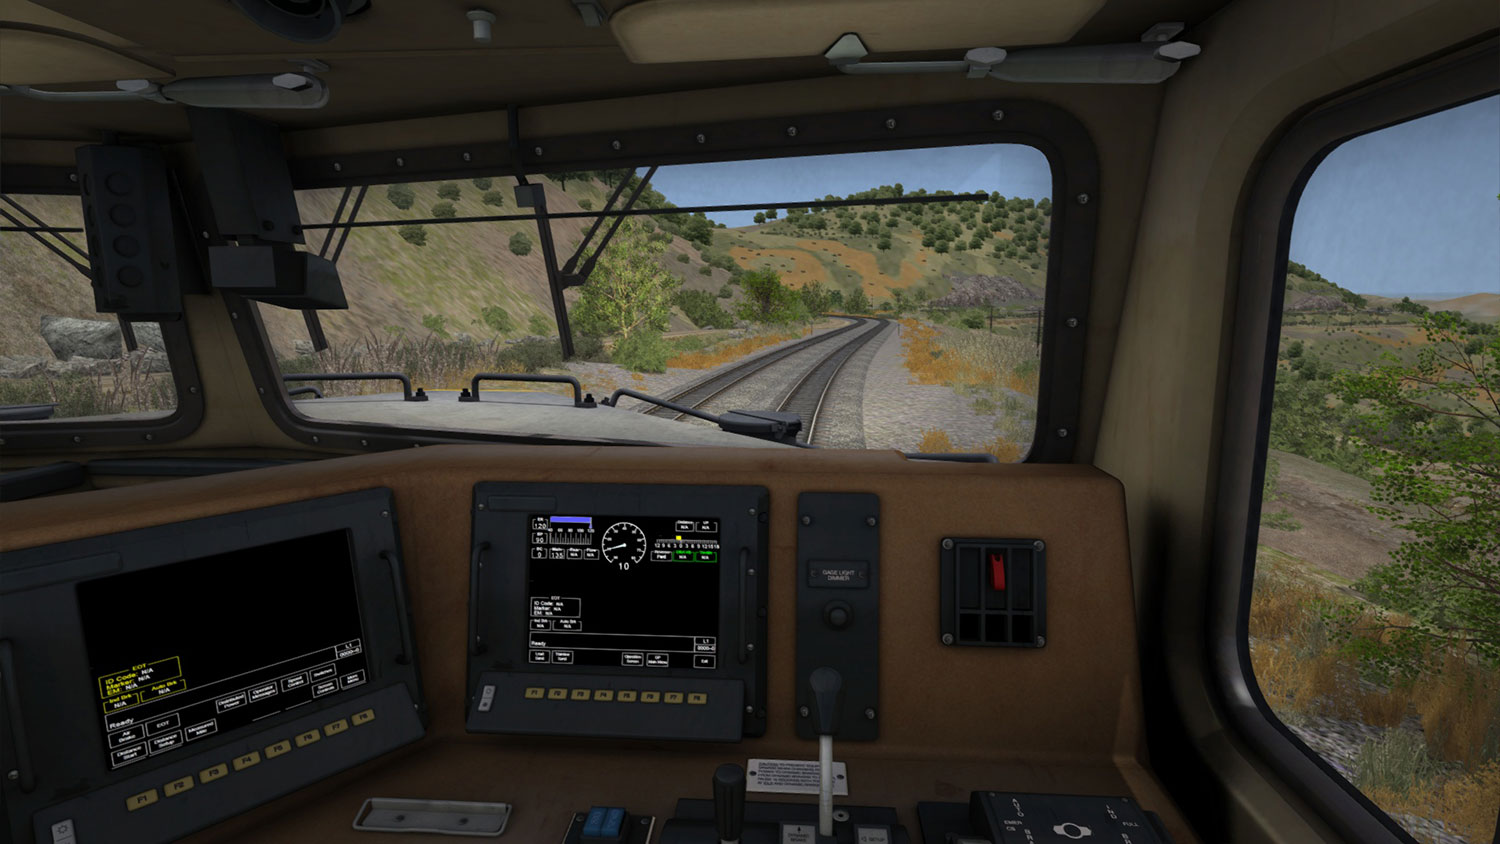 Train Simulator Classic